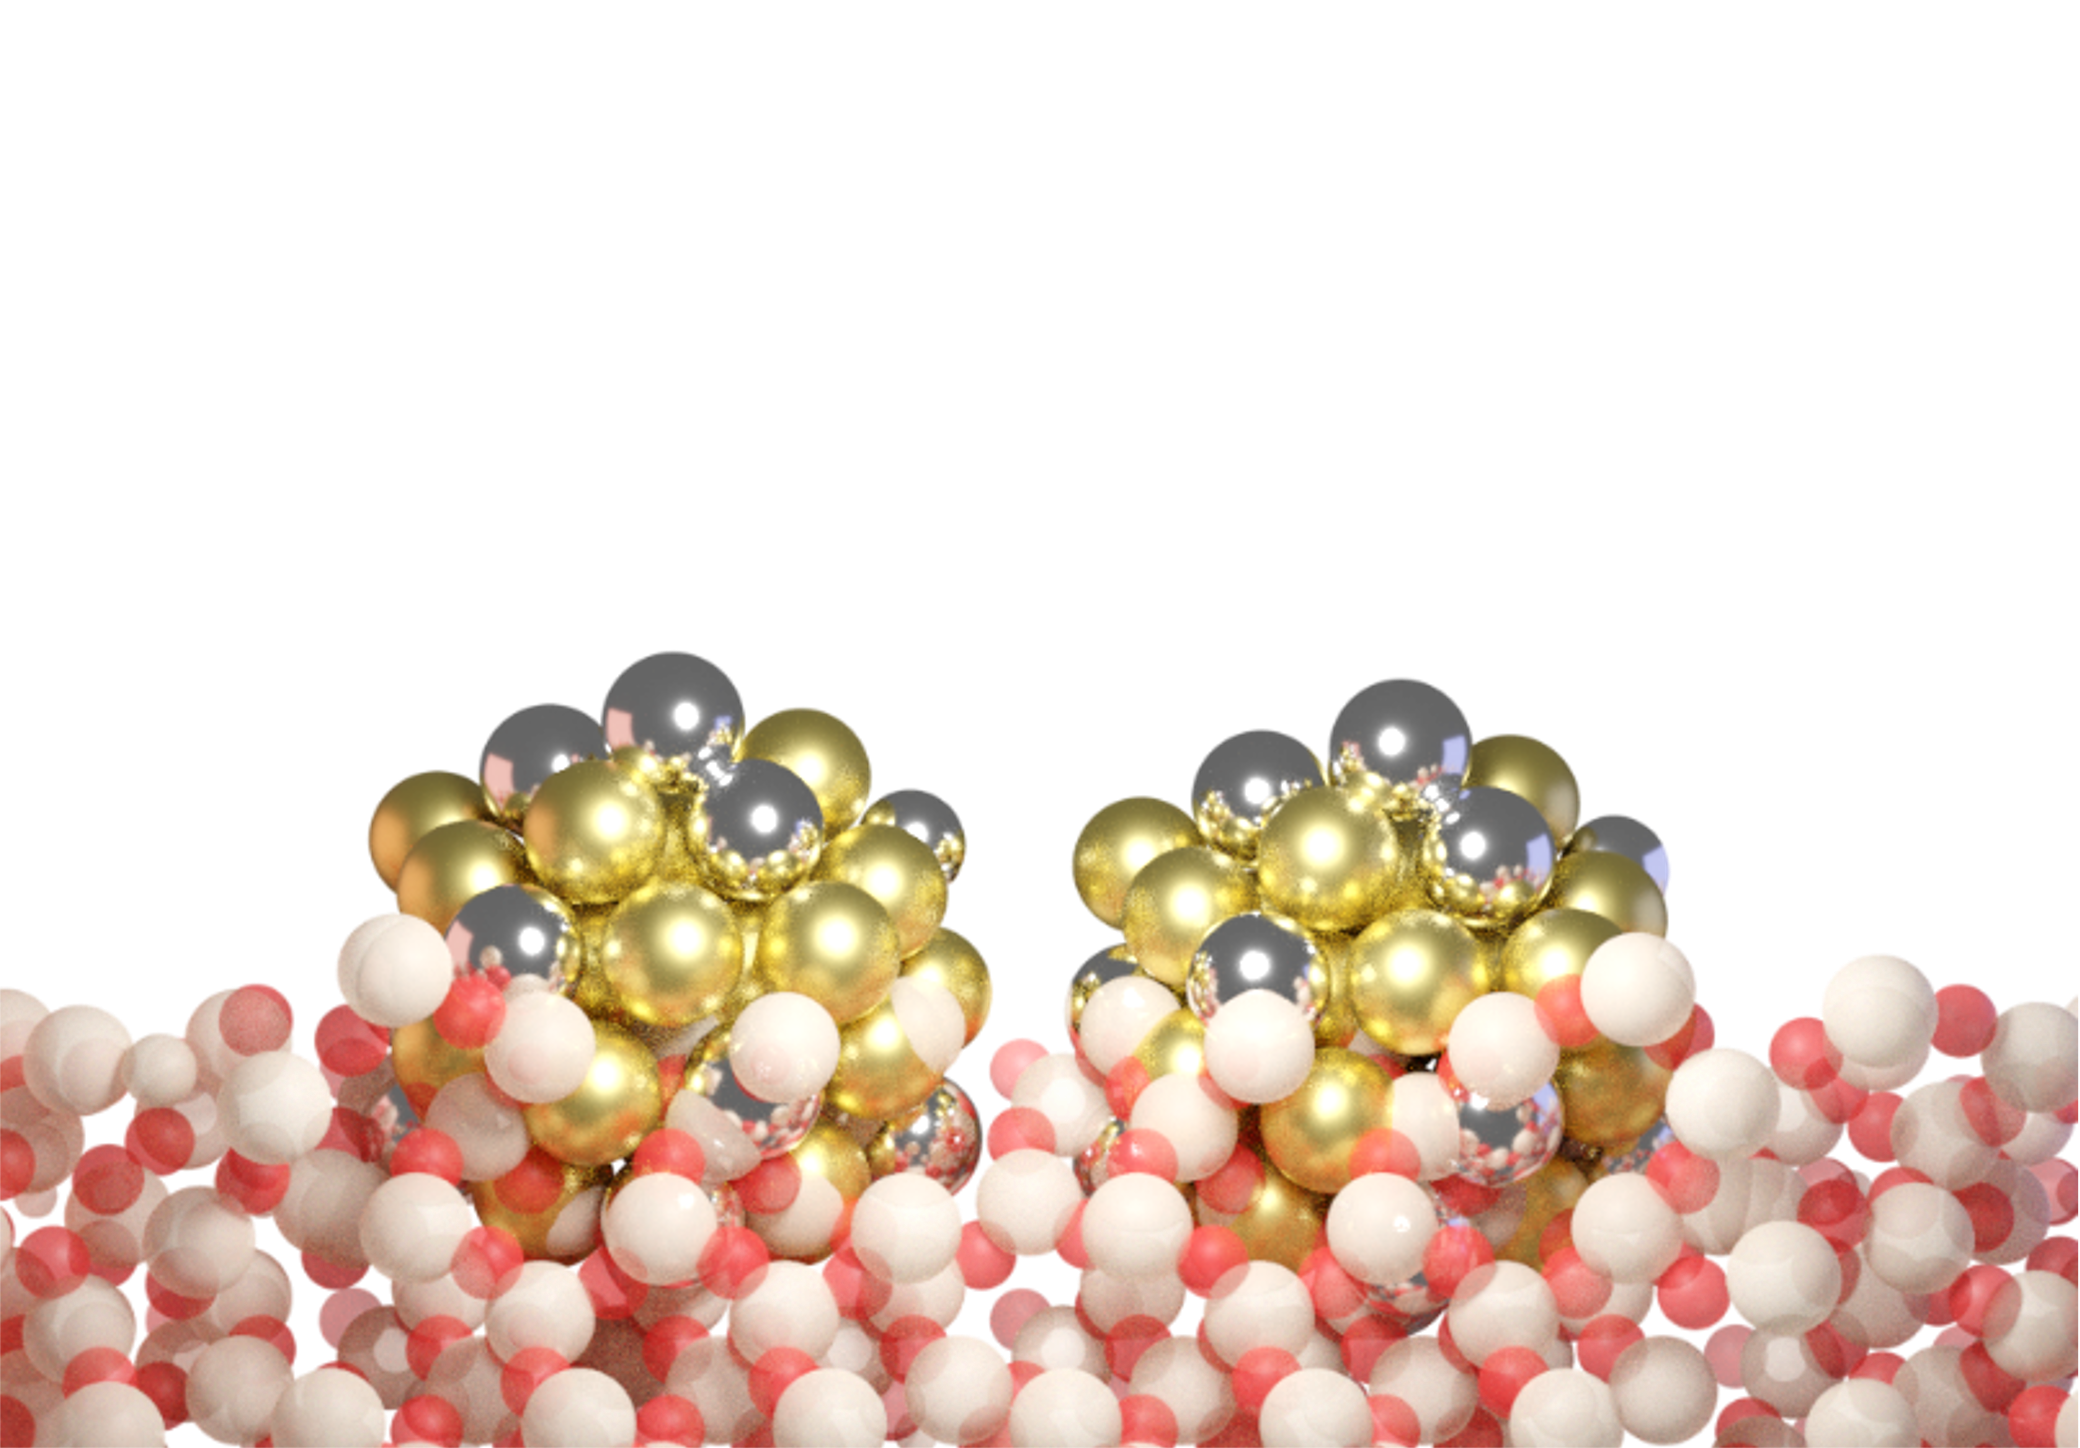 image of nanopartlces closer together